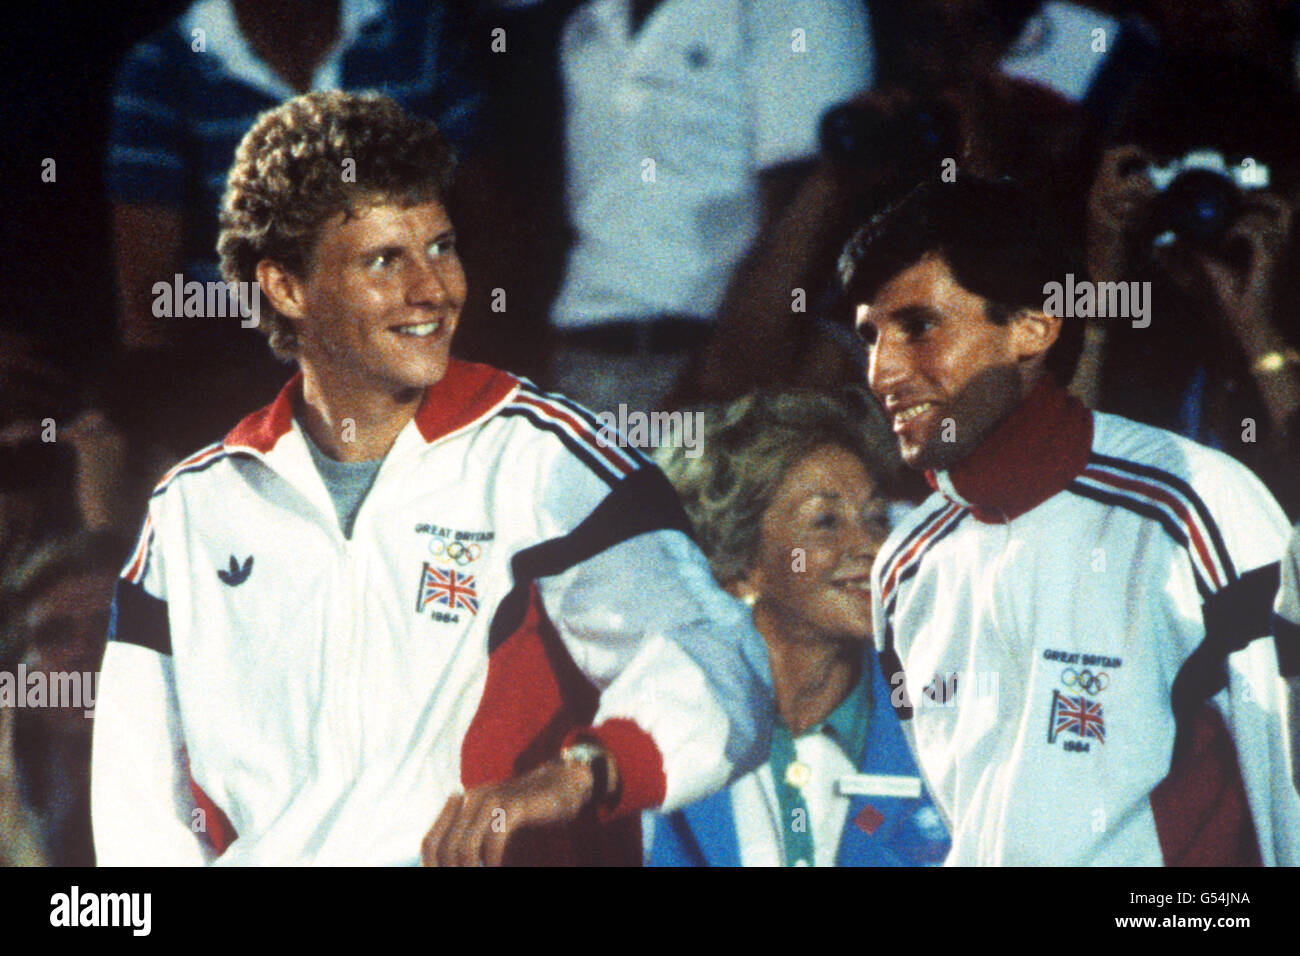 Athletics - Los Angeles Olympic Games 1984 - Men's 1500m Final - Medal Ceremony. Silver medal winner Steve Cram (l) congratulates Great Britain team mate Sebastian Coe (r) on winning the Gold medal. Stock Photo